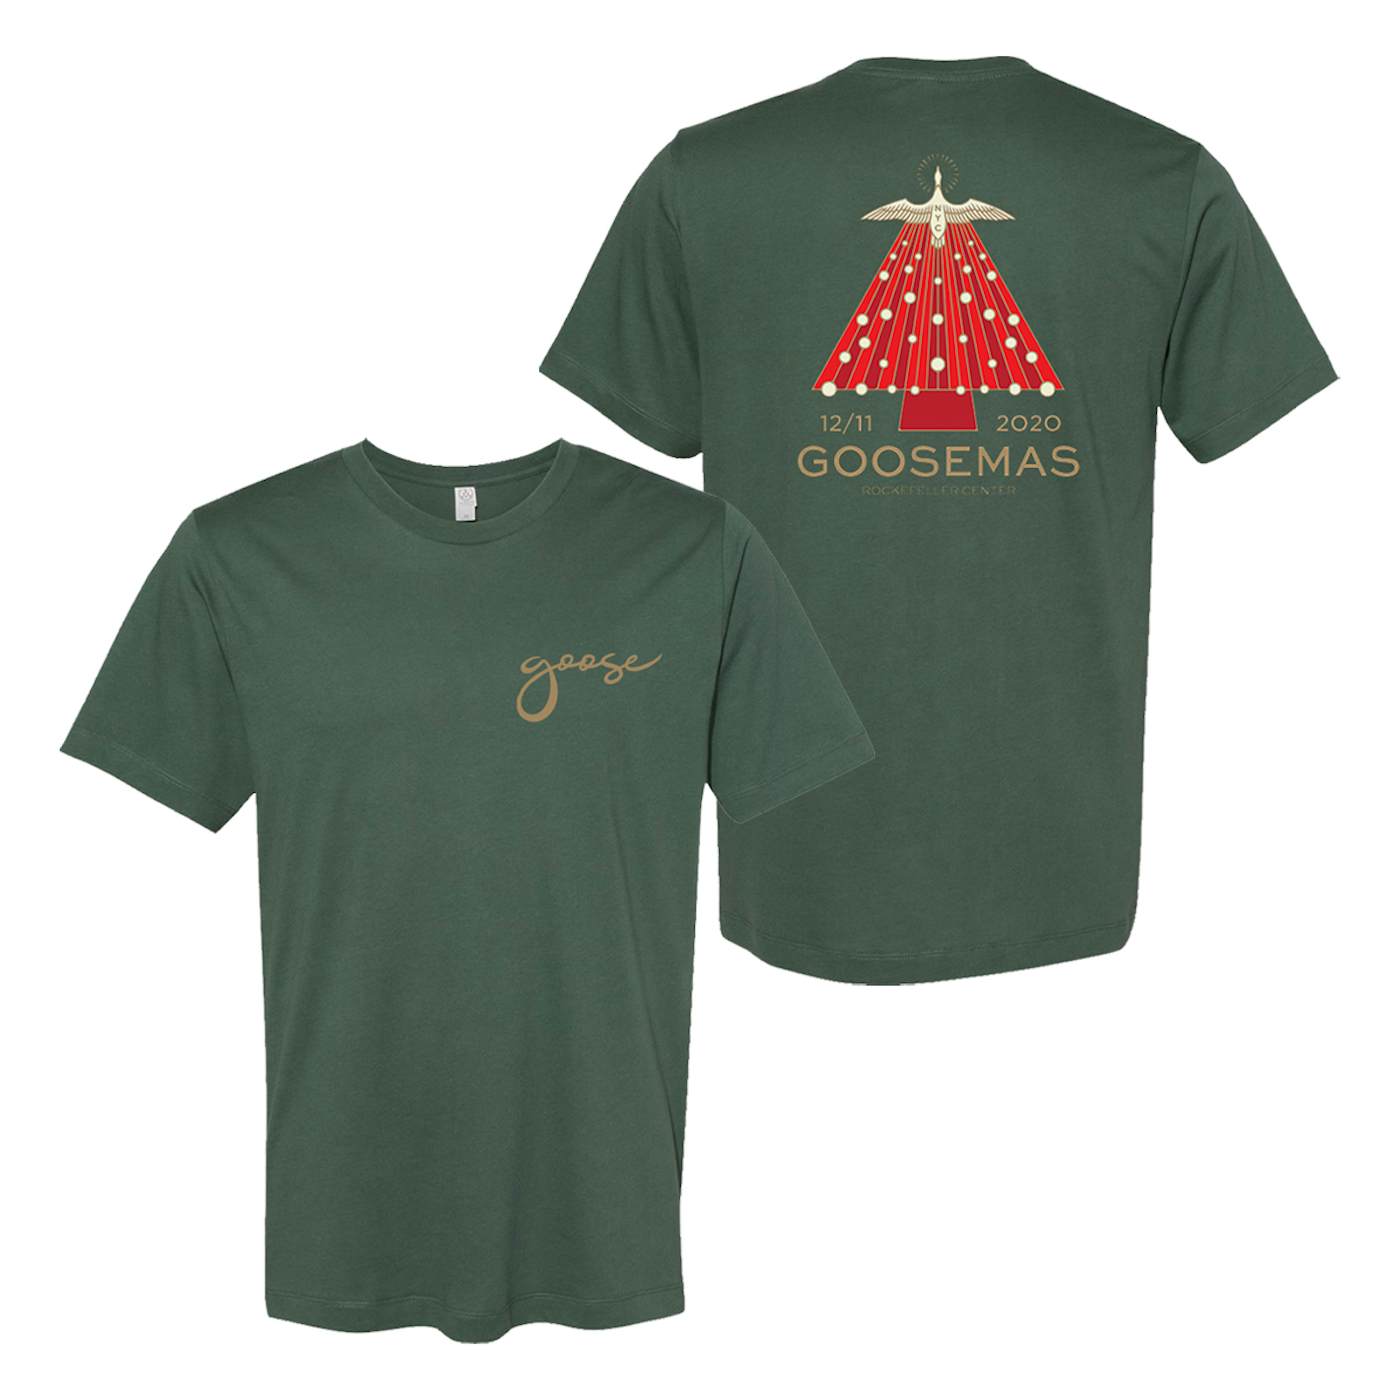 Goosemas 2020 T-shirt